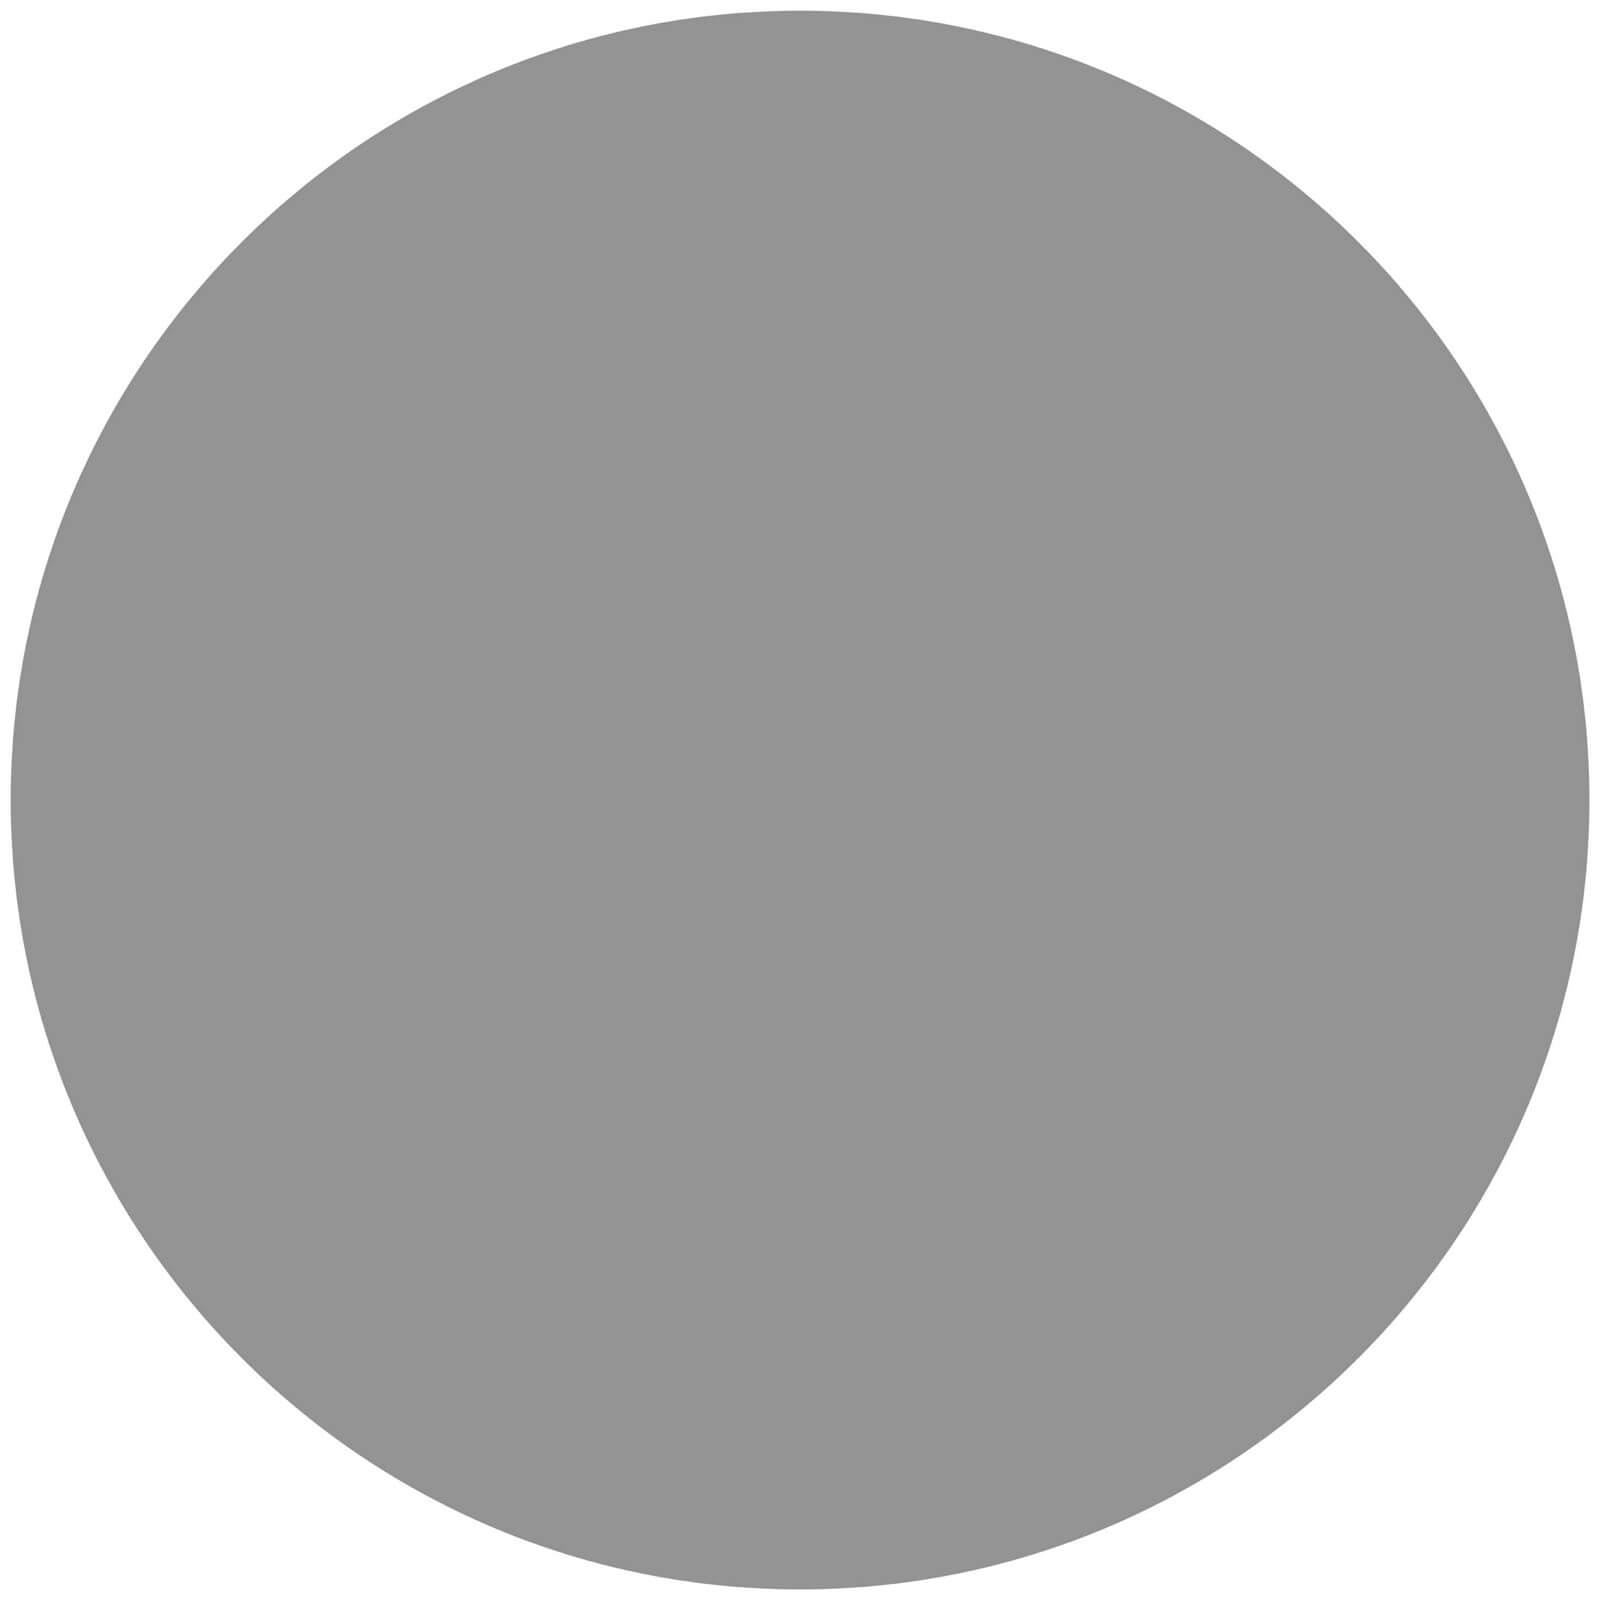 Rust-Oleum Mode Primer Grey Spray Paint - 400ml